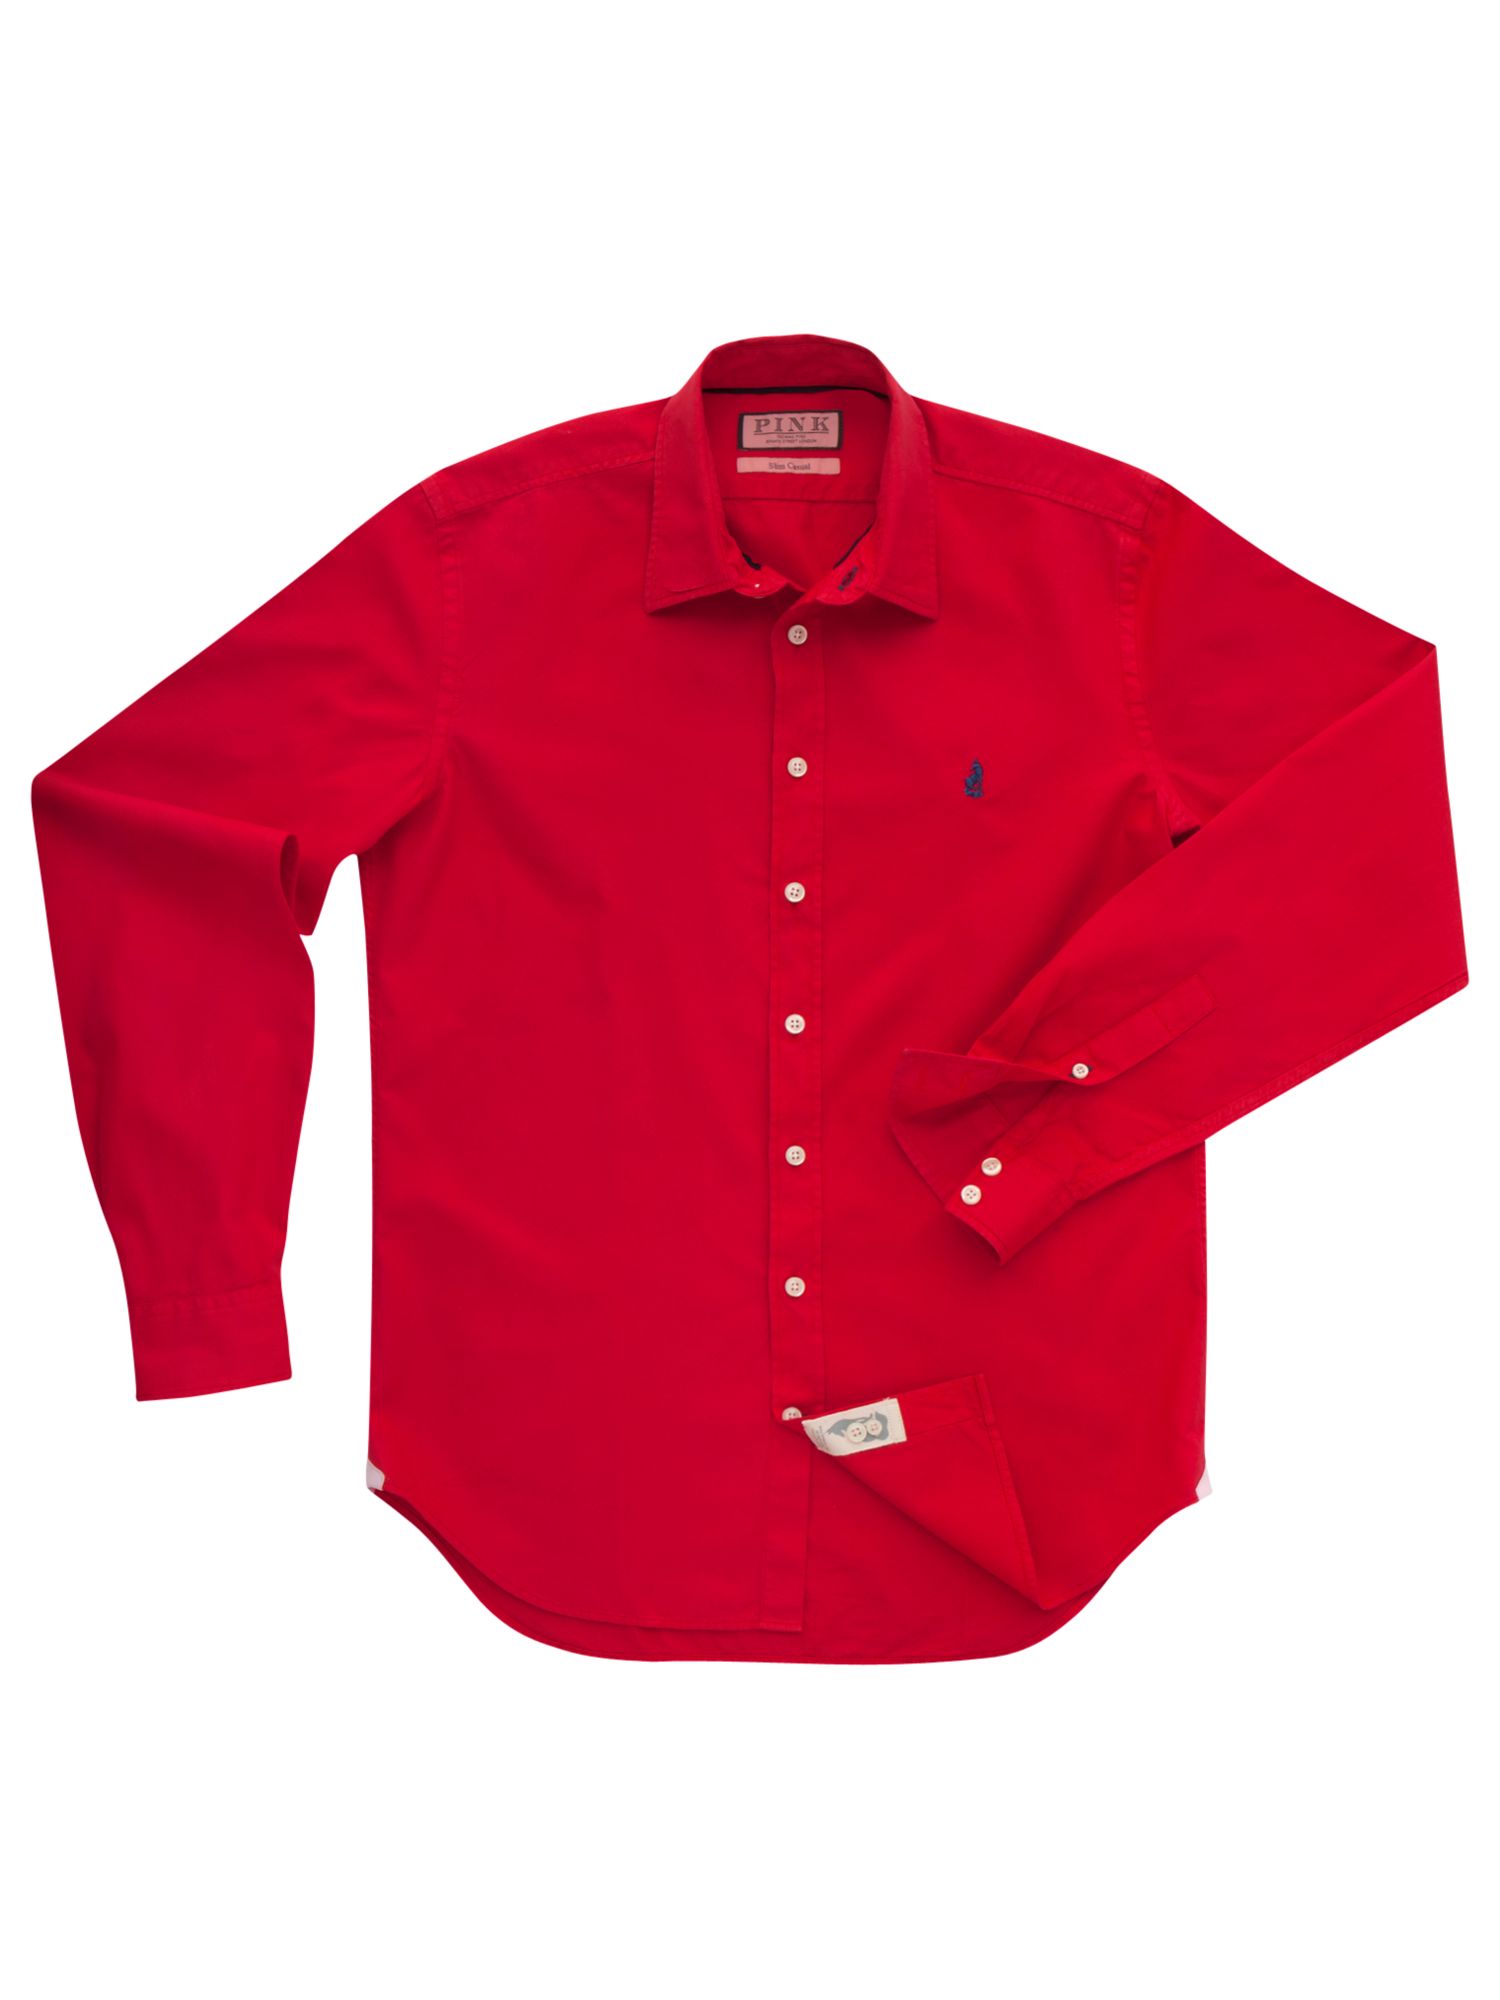 Thomas Pink Drake Plain Button Cuff Shirt, Red